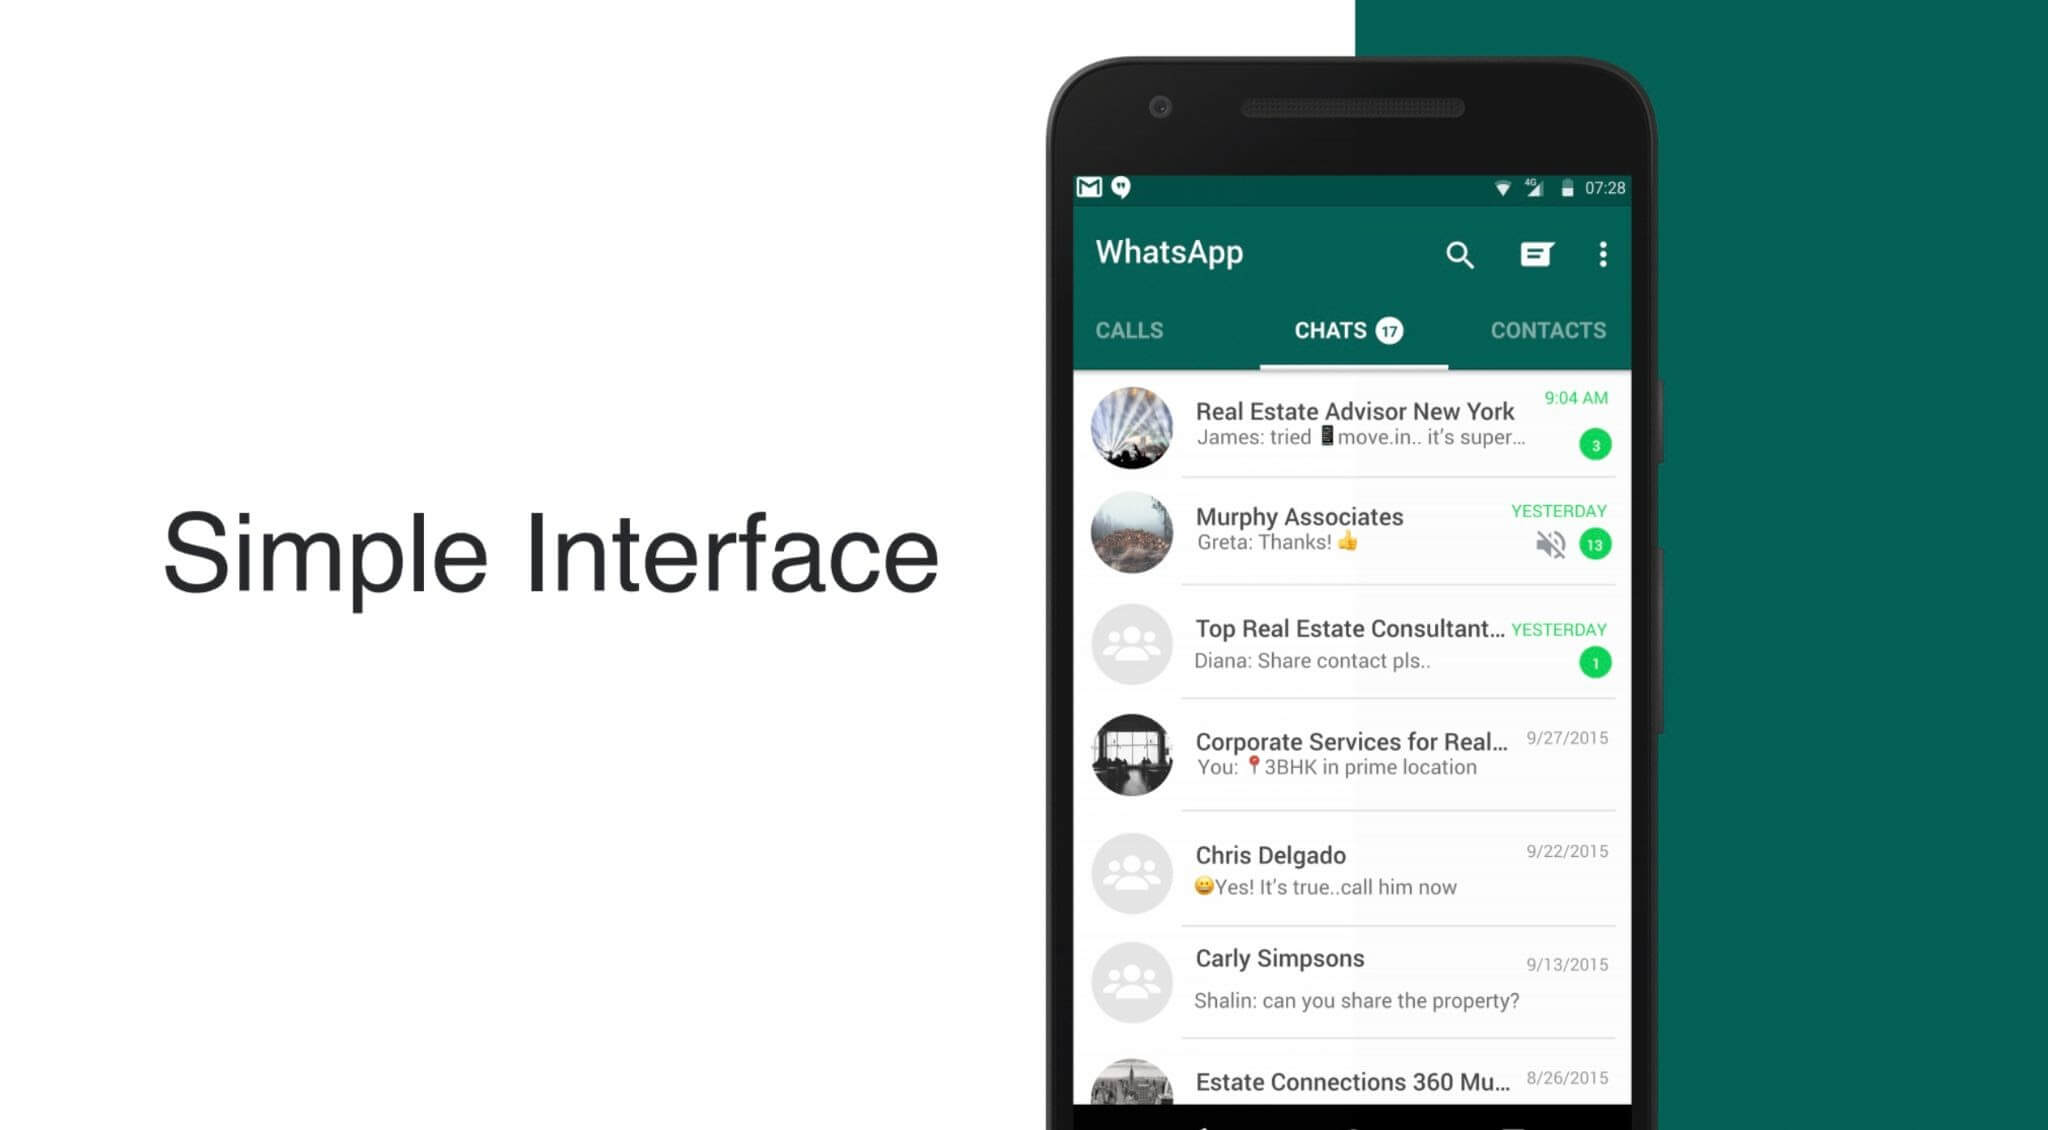 WhatsApp interface